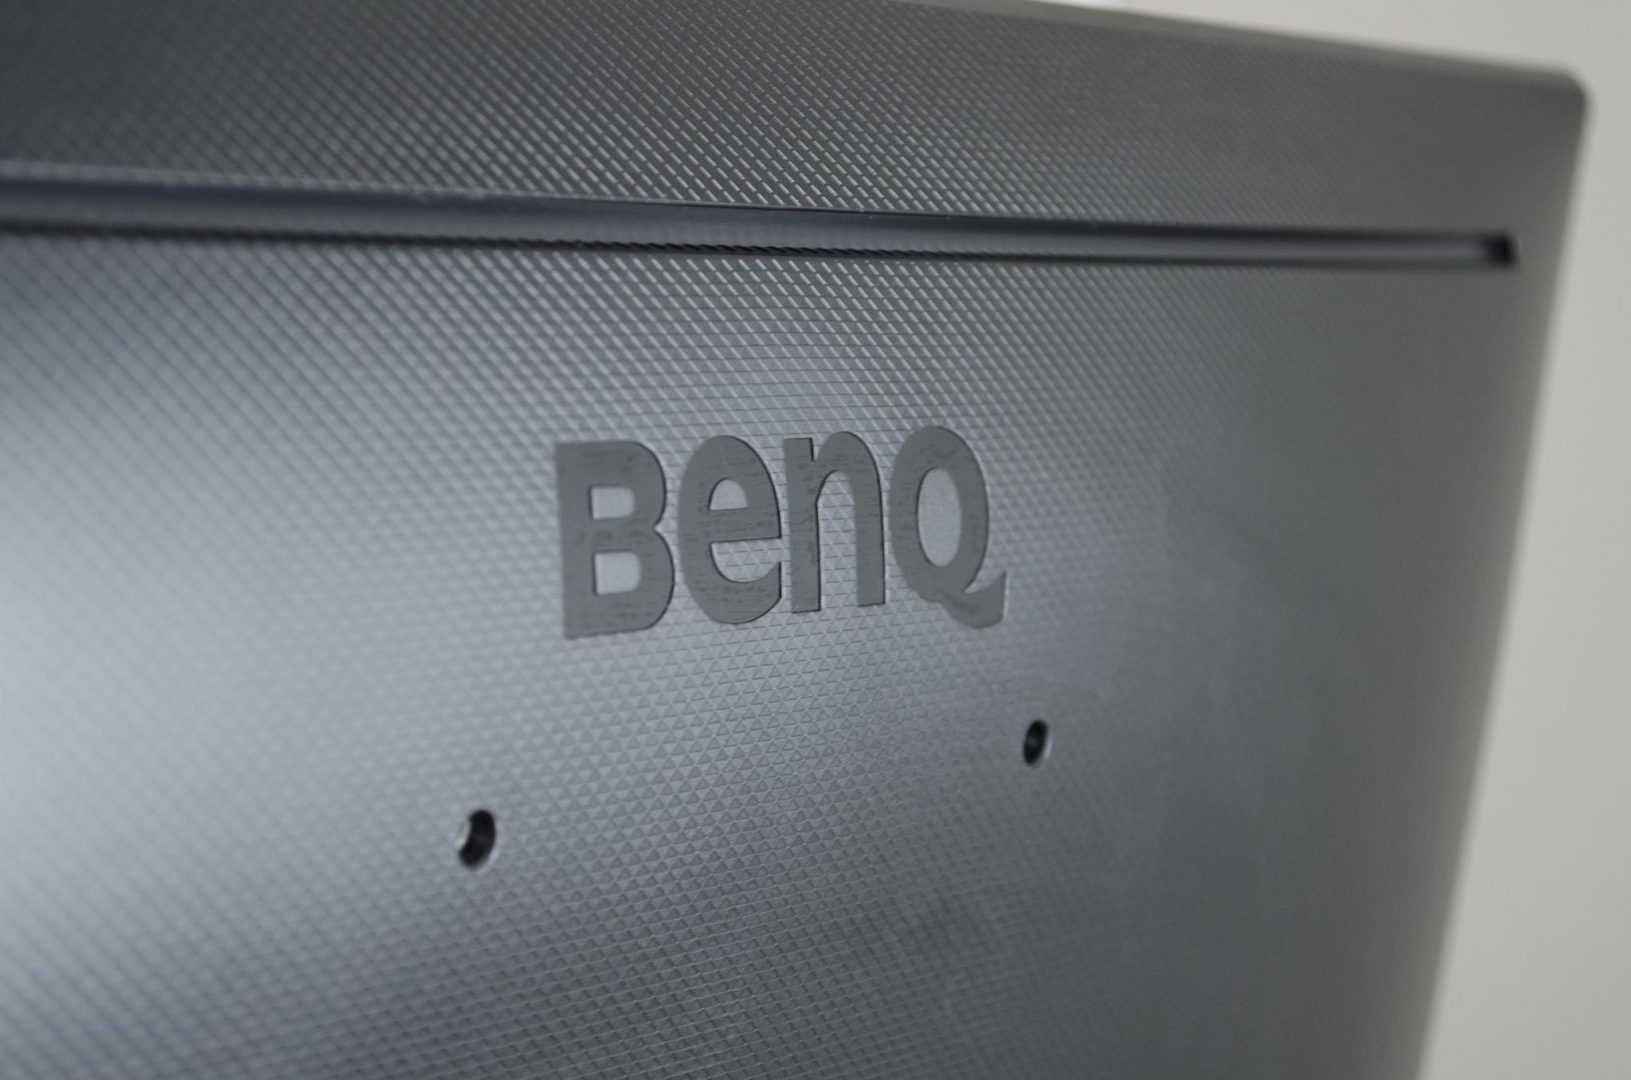 BenQ GW2270 LED Monitor Review